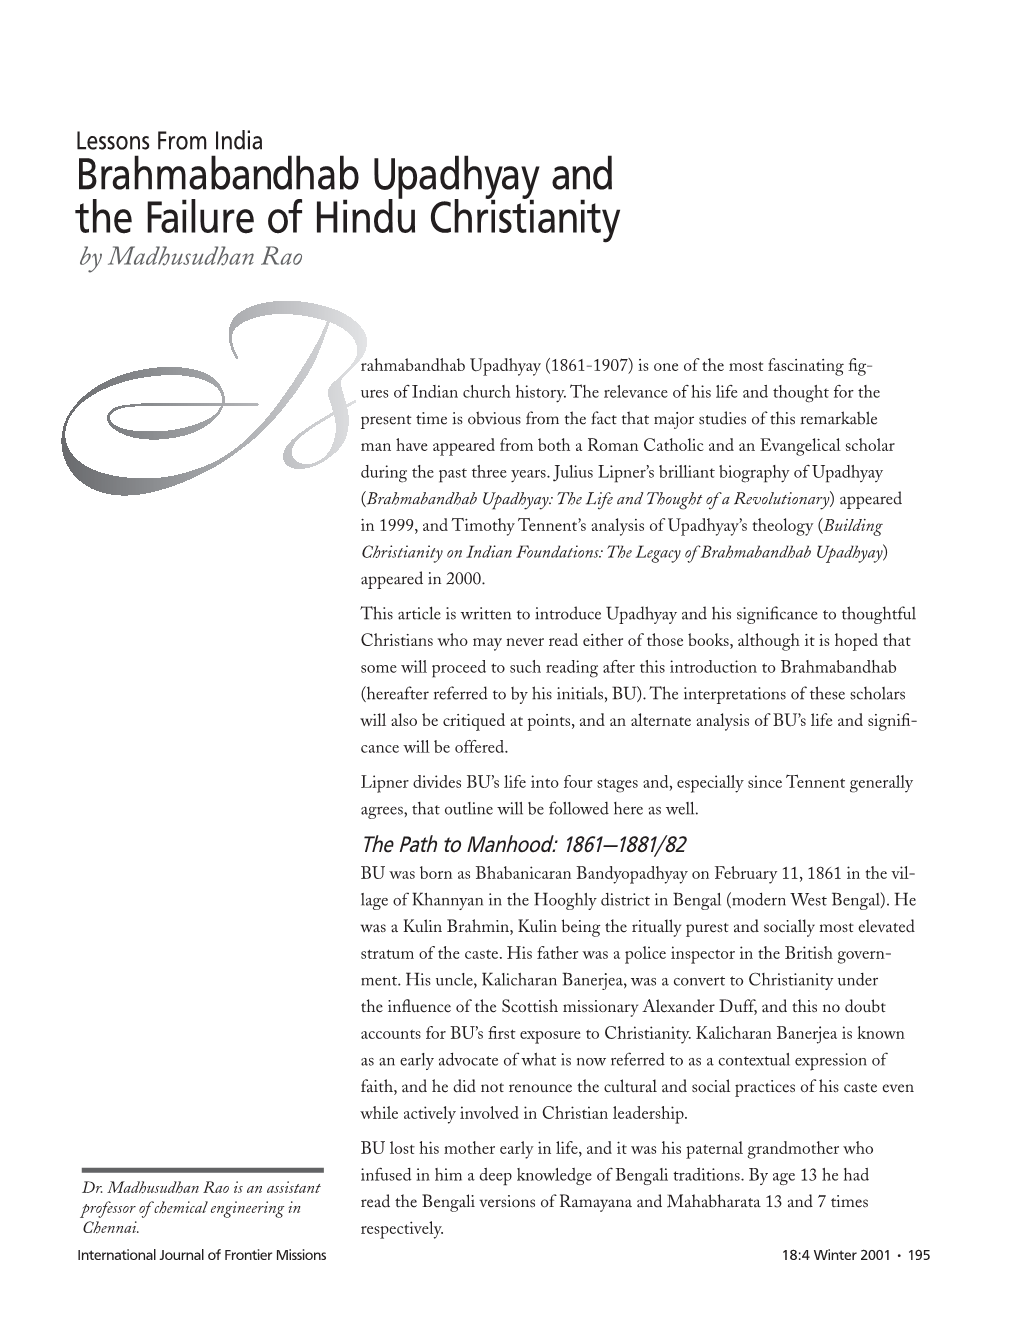 Brahmabandhab Upadhyay and the Failure of Hindu Christianity by Madhusudhan Rao